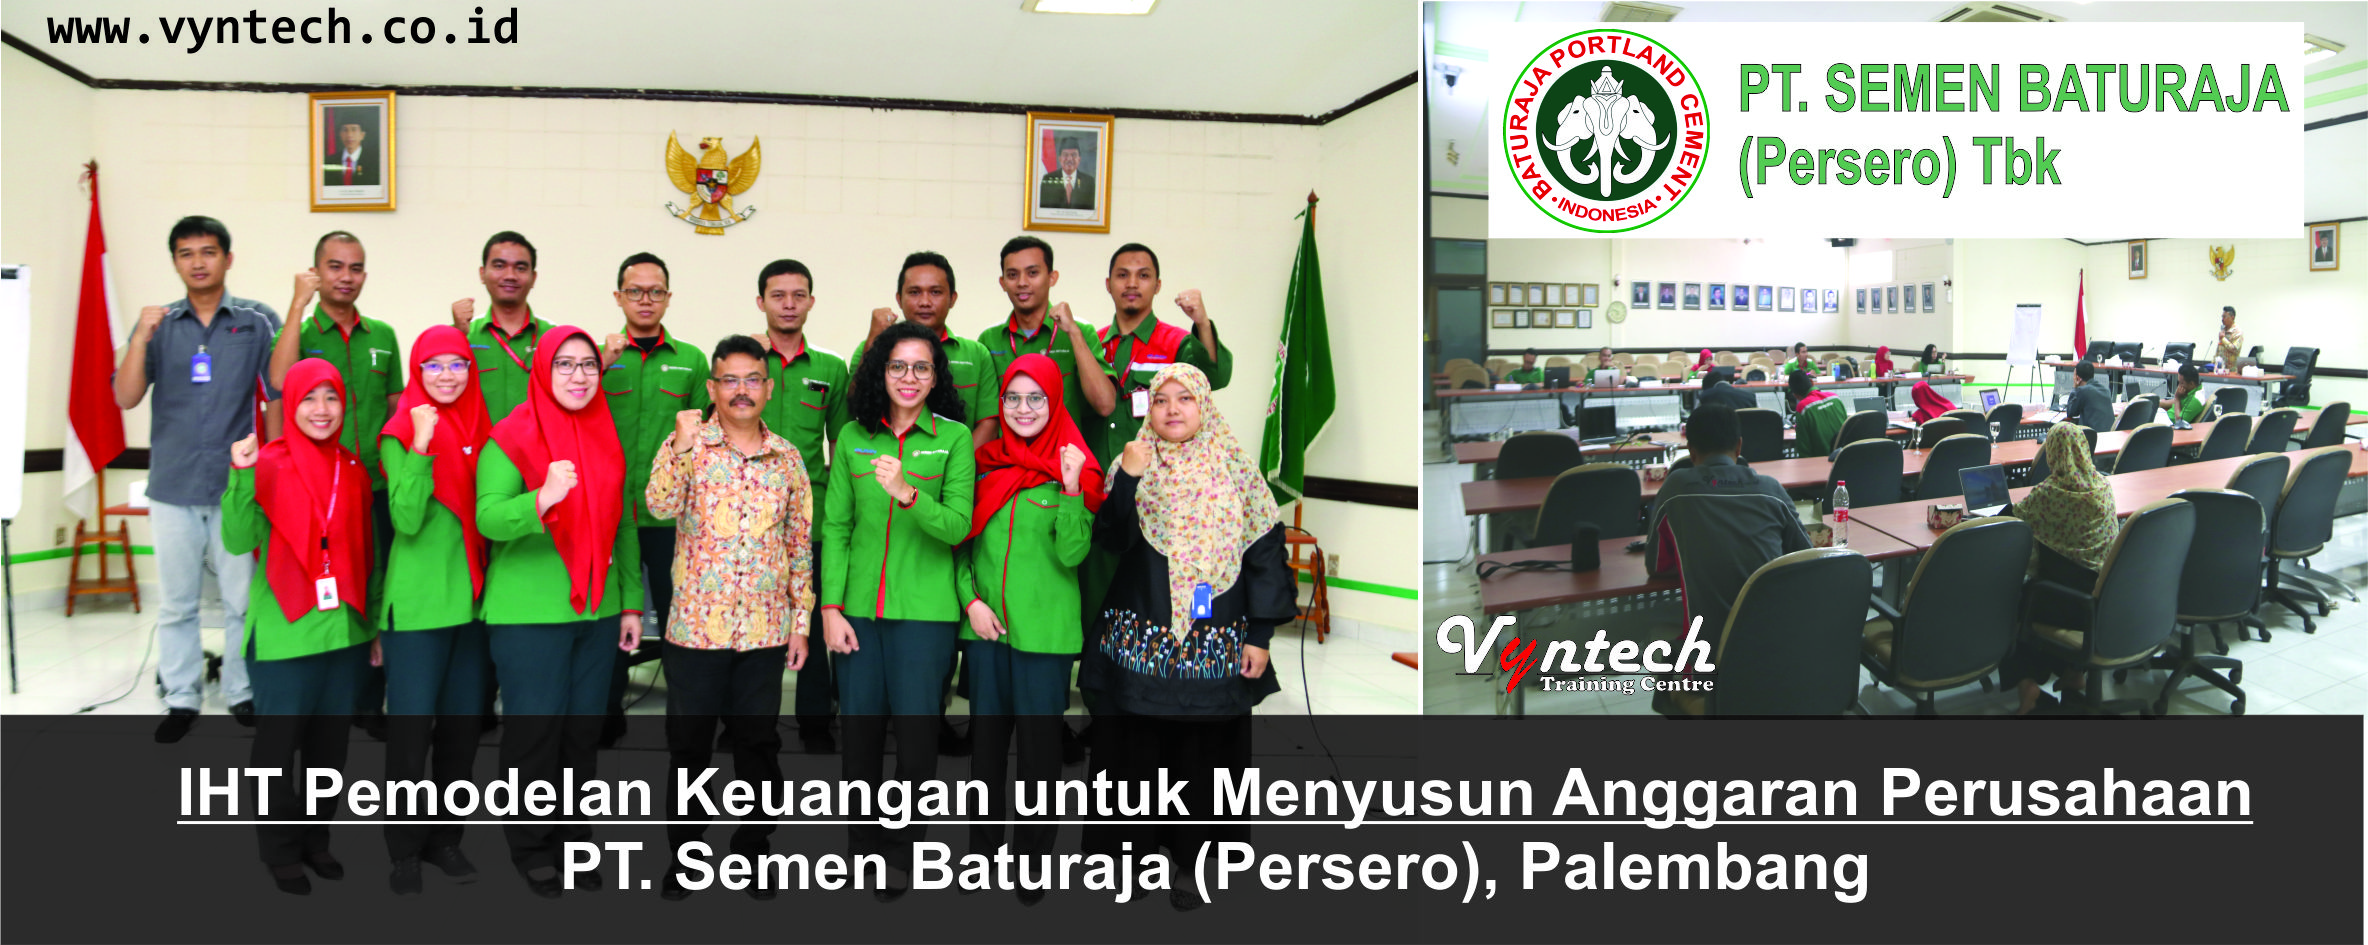 20190910 Training Pemodelan Keuangan untuk Menyusun Anggaran Perusahaan - PT. Semen Baturaja (Persero) Palembang